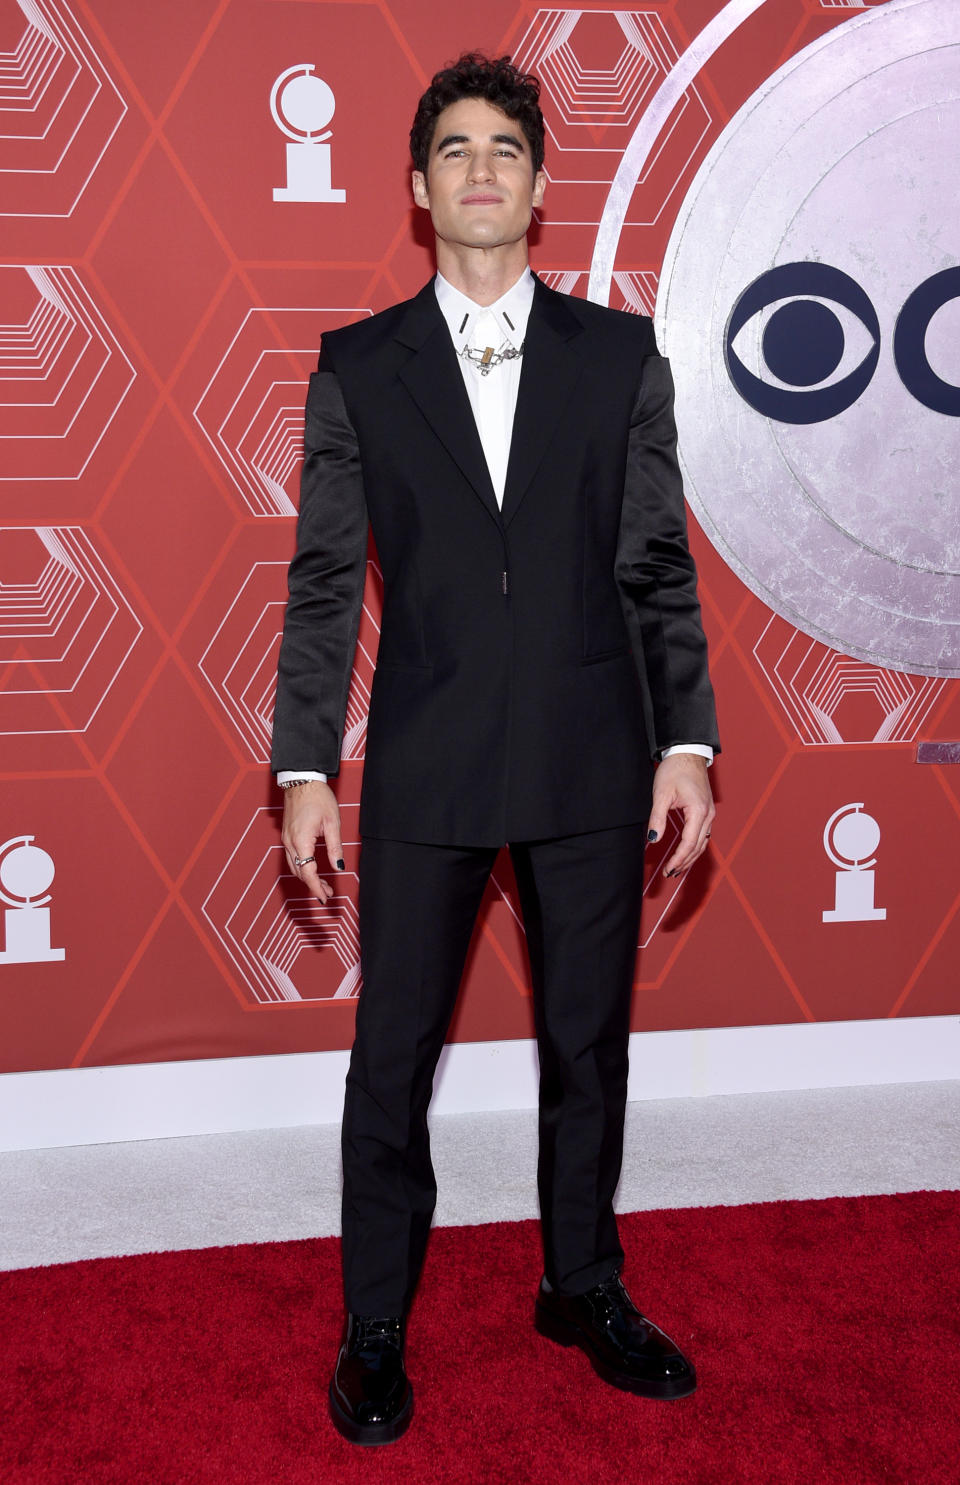 Darren Criss at the 2021 Tony Awards. - Credit: Invision